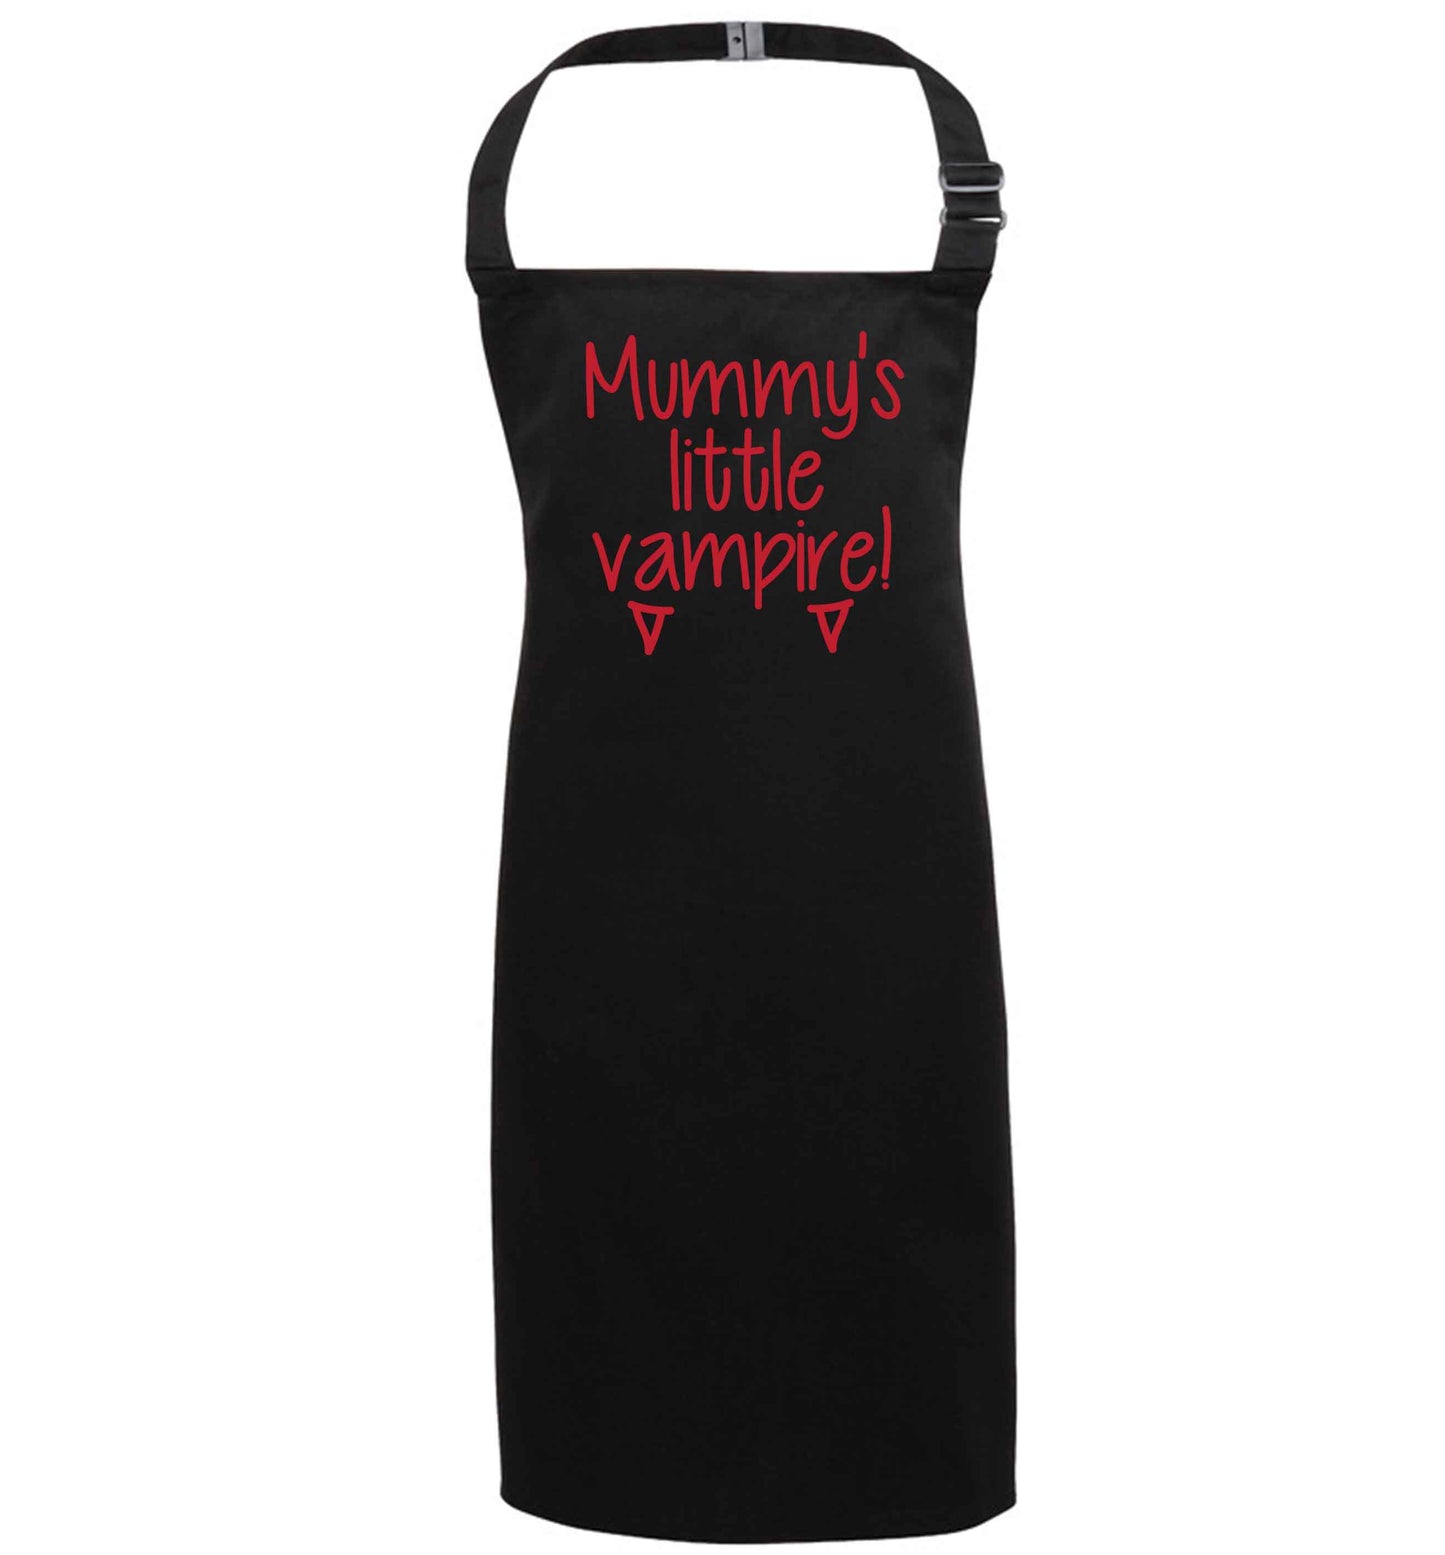 Mummy's little vampire black apron 7-10 years